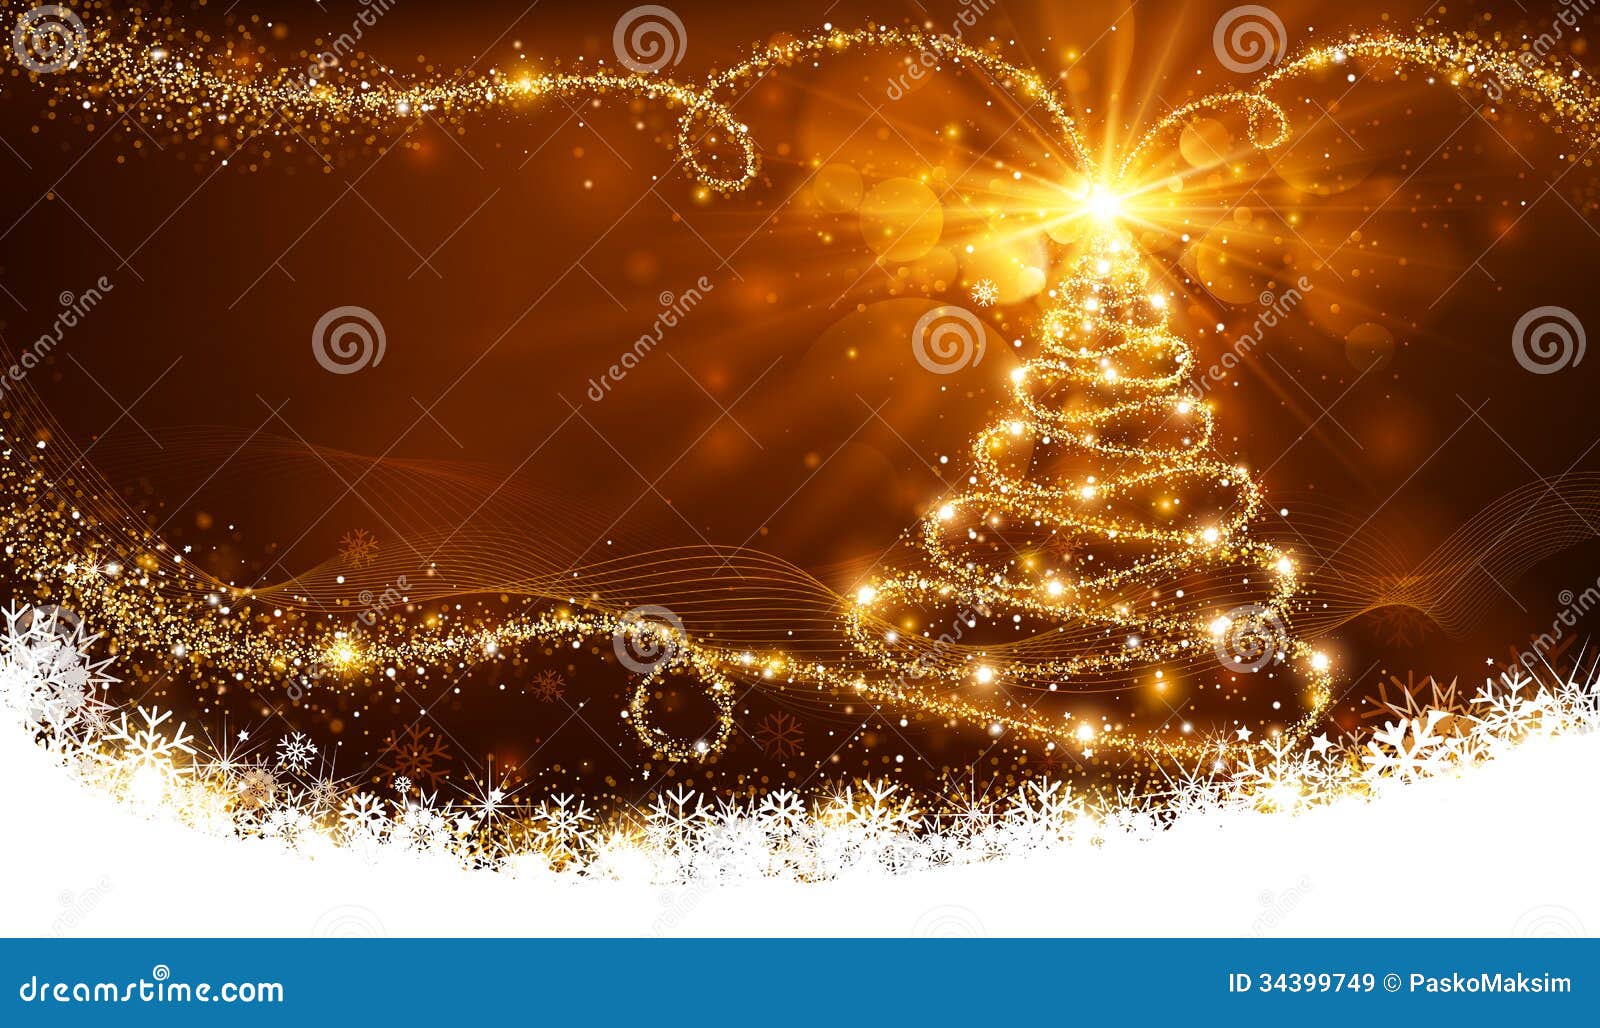 magic christmas tree